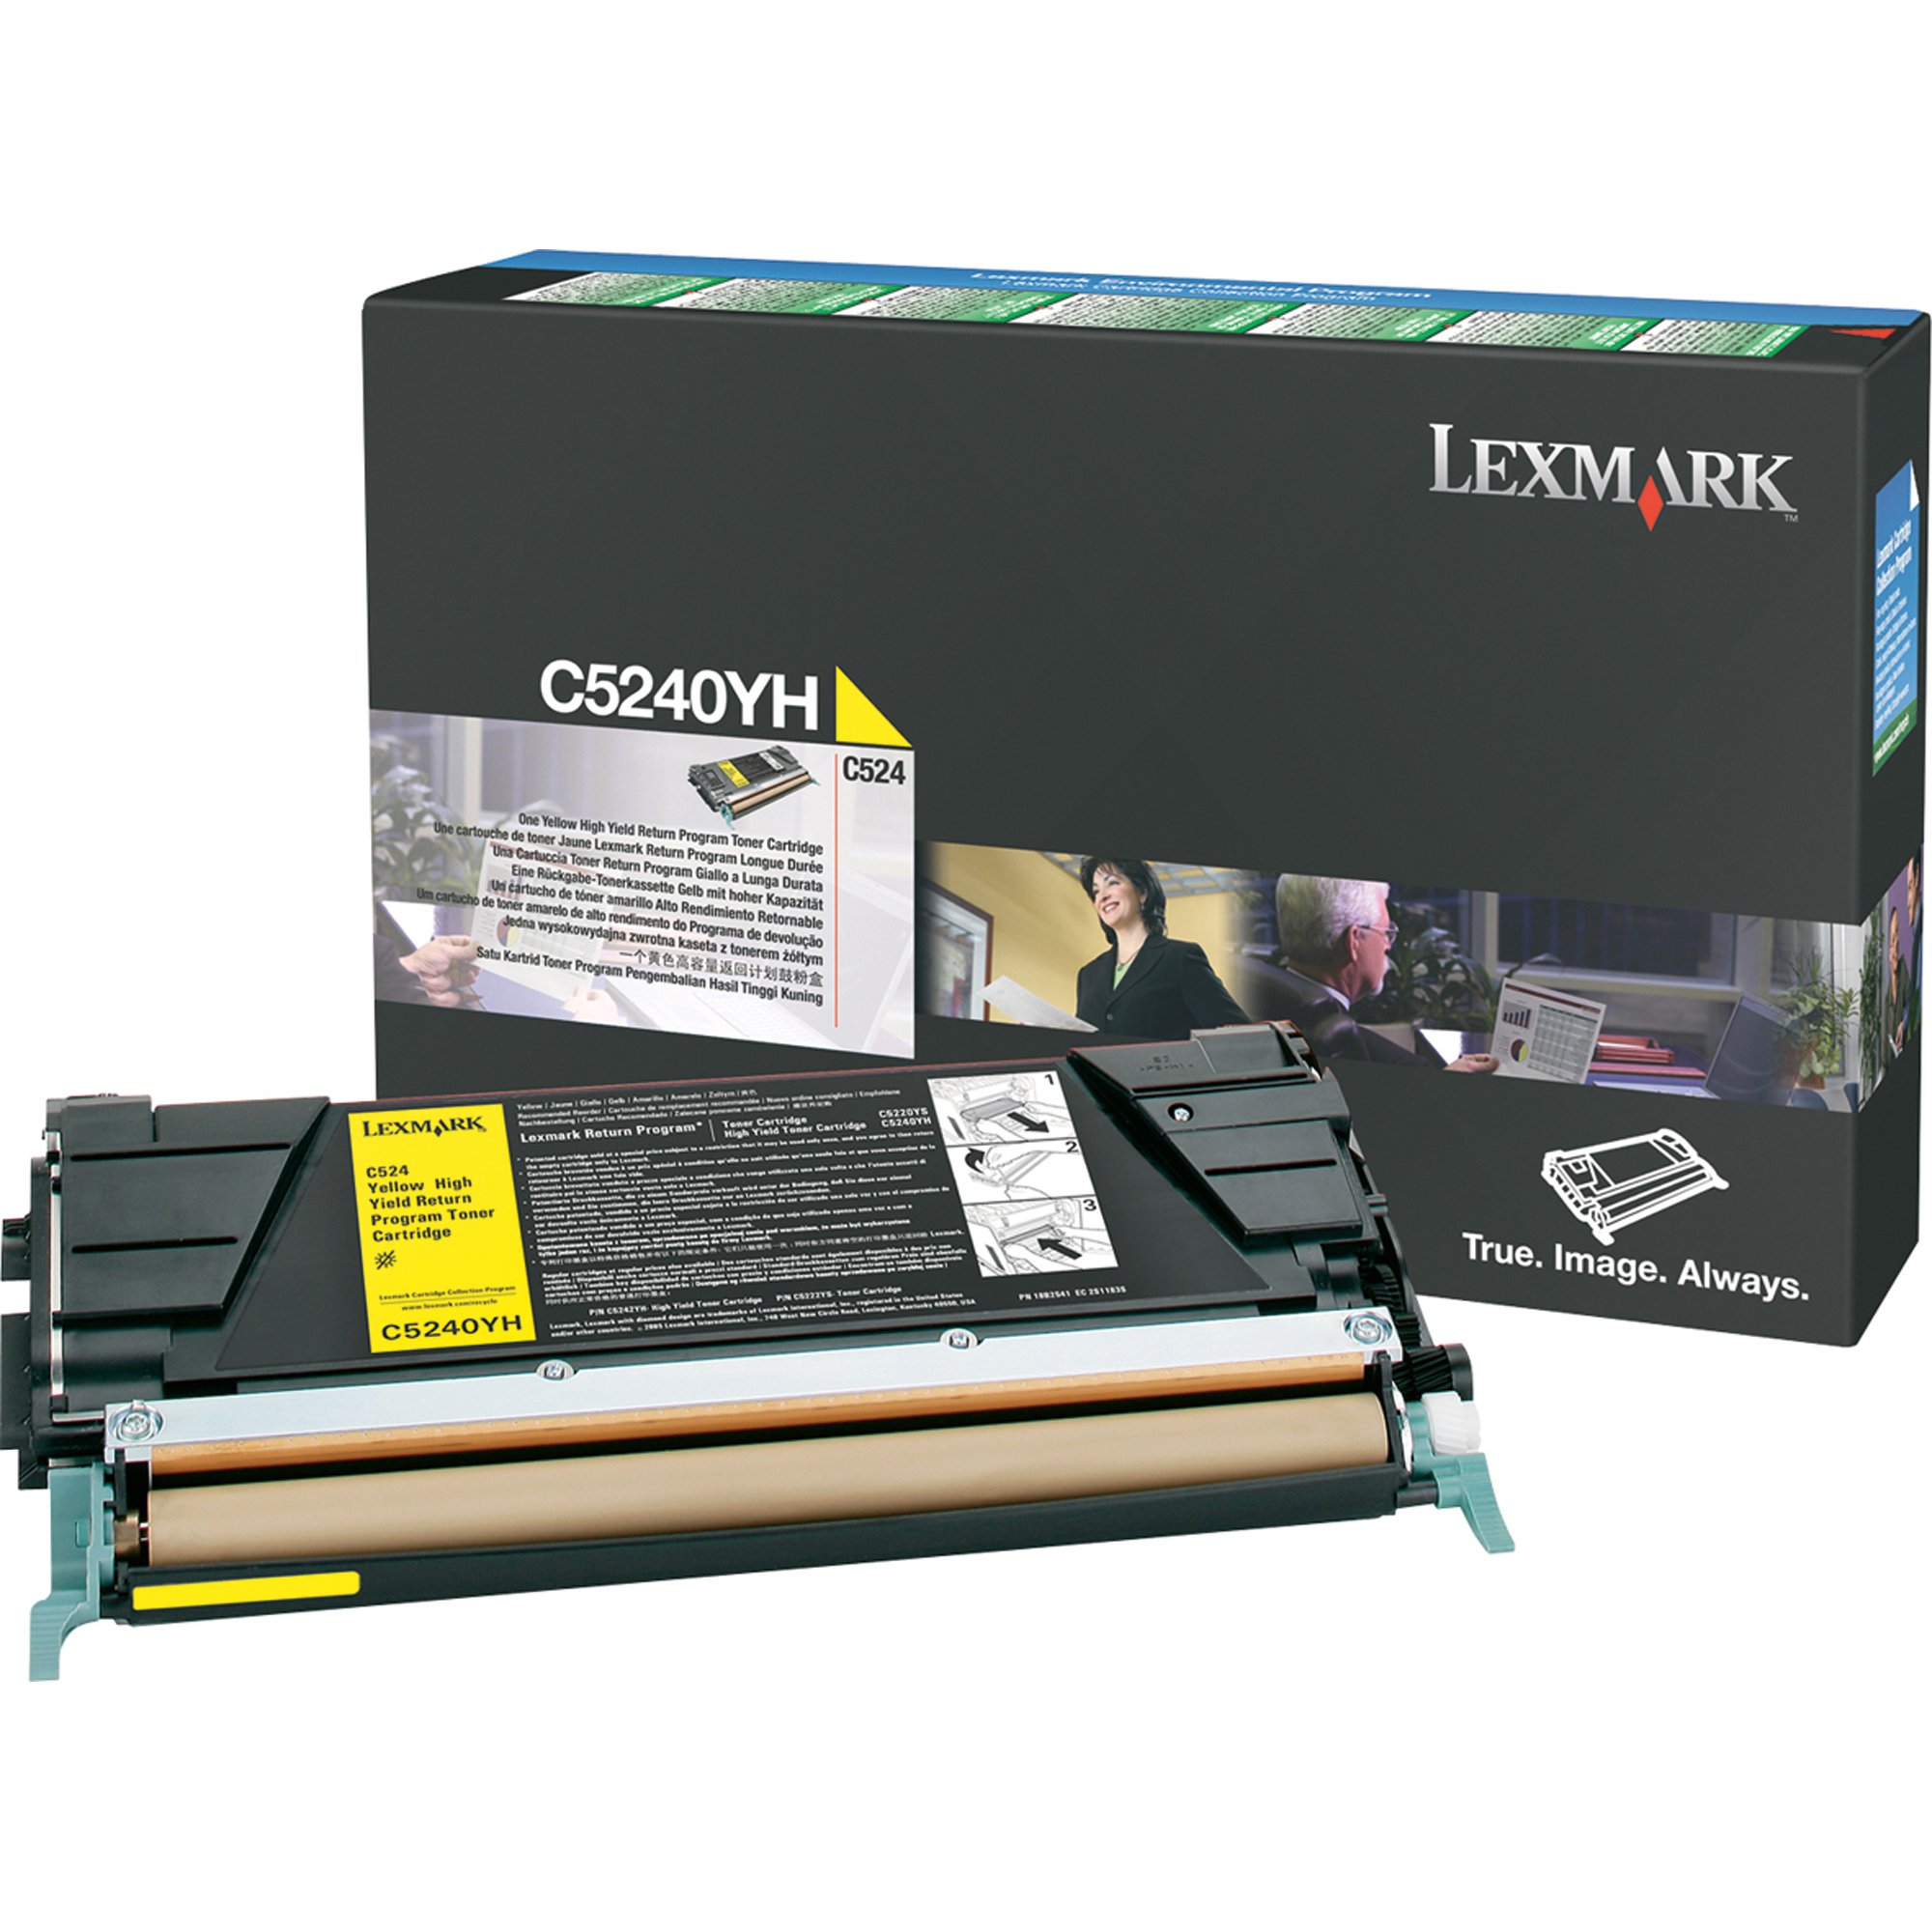 Lexmark Toner C5240YH